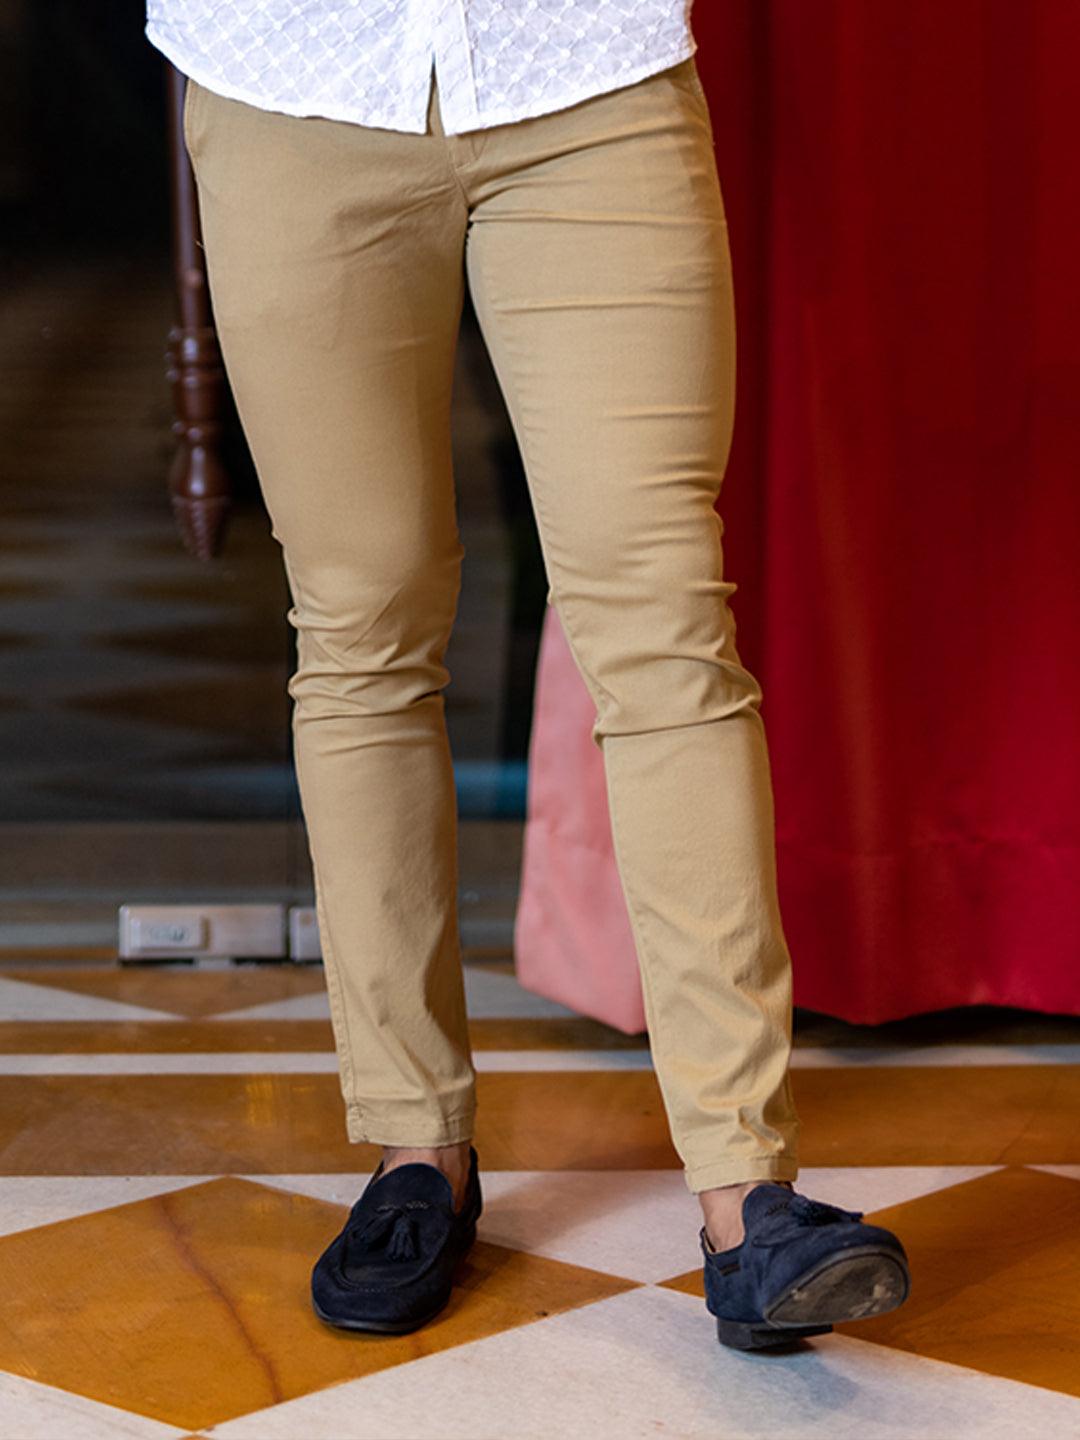 Buy Men's Brooklyn Fit Cotton Stretch Trouser Online | Indian Terrain